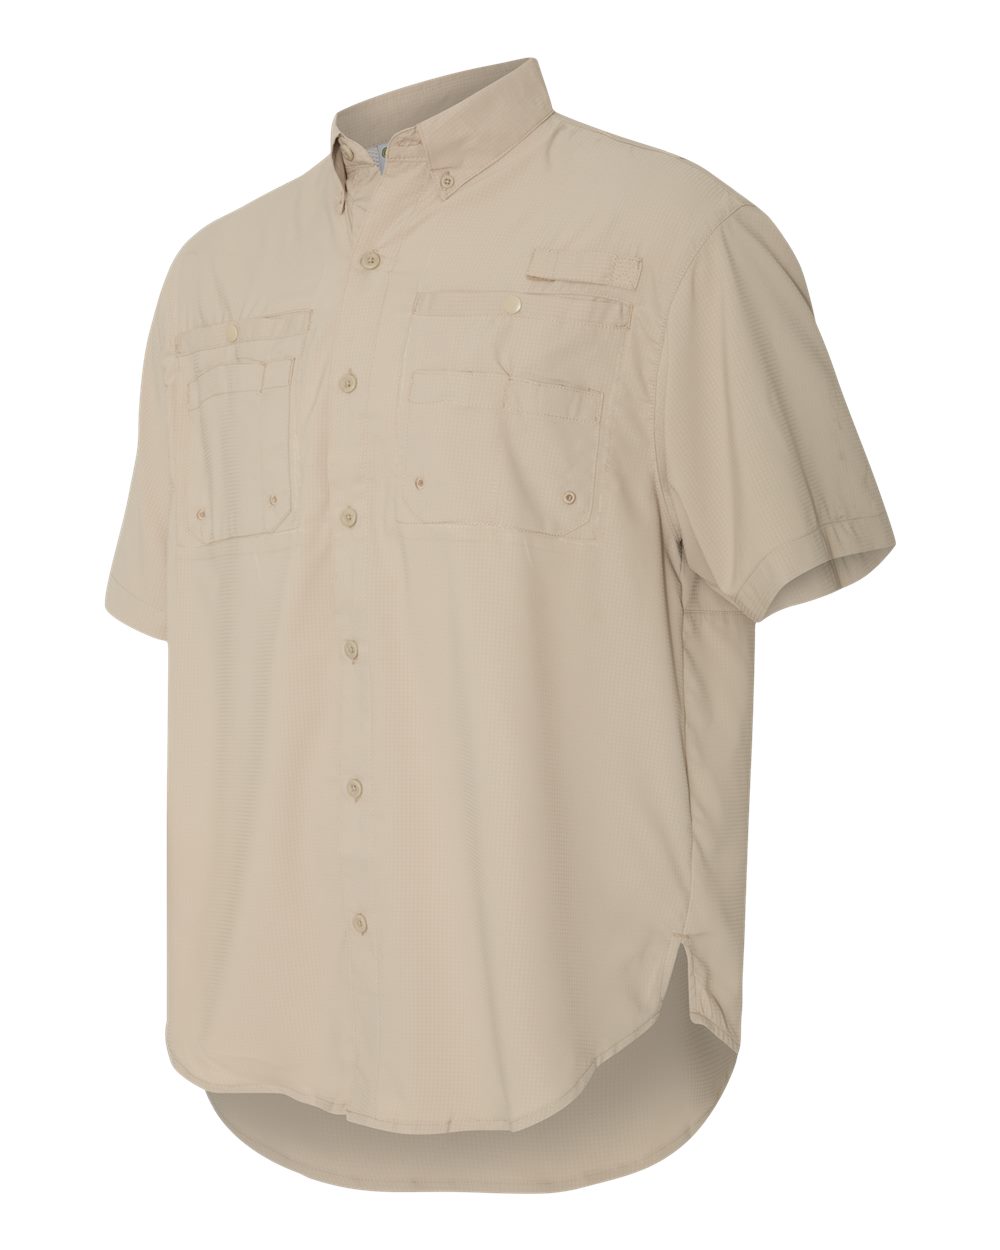 Hilton ZP2297 - Baja Short Sleeve Fishing Shirt